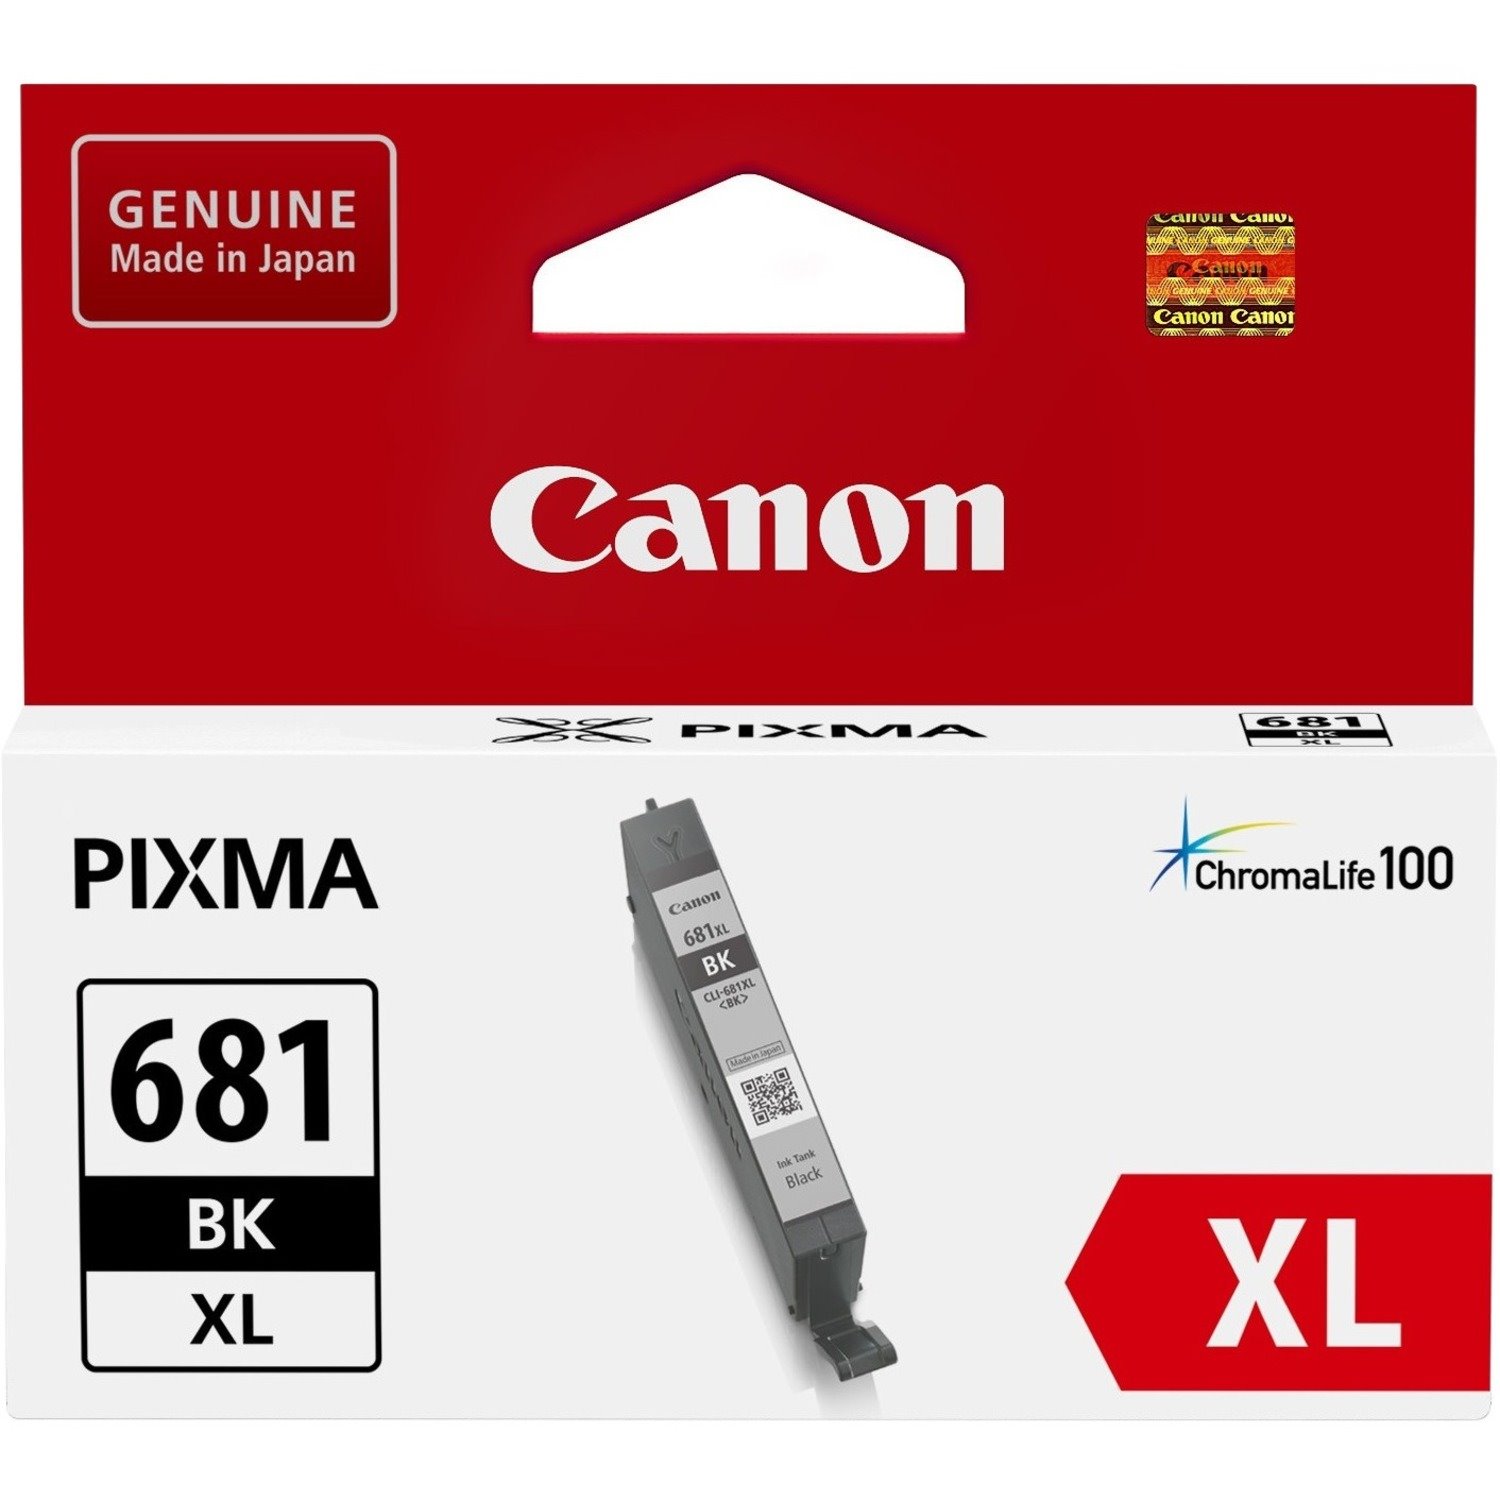 Canon CLI-681 XLBK Original High Yield Inkjet Ink Cartridge - Pigment Black - 1 Pack